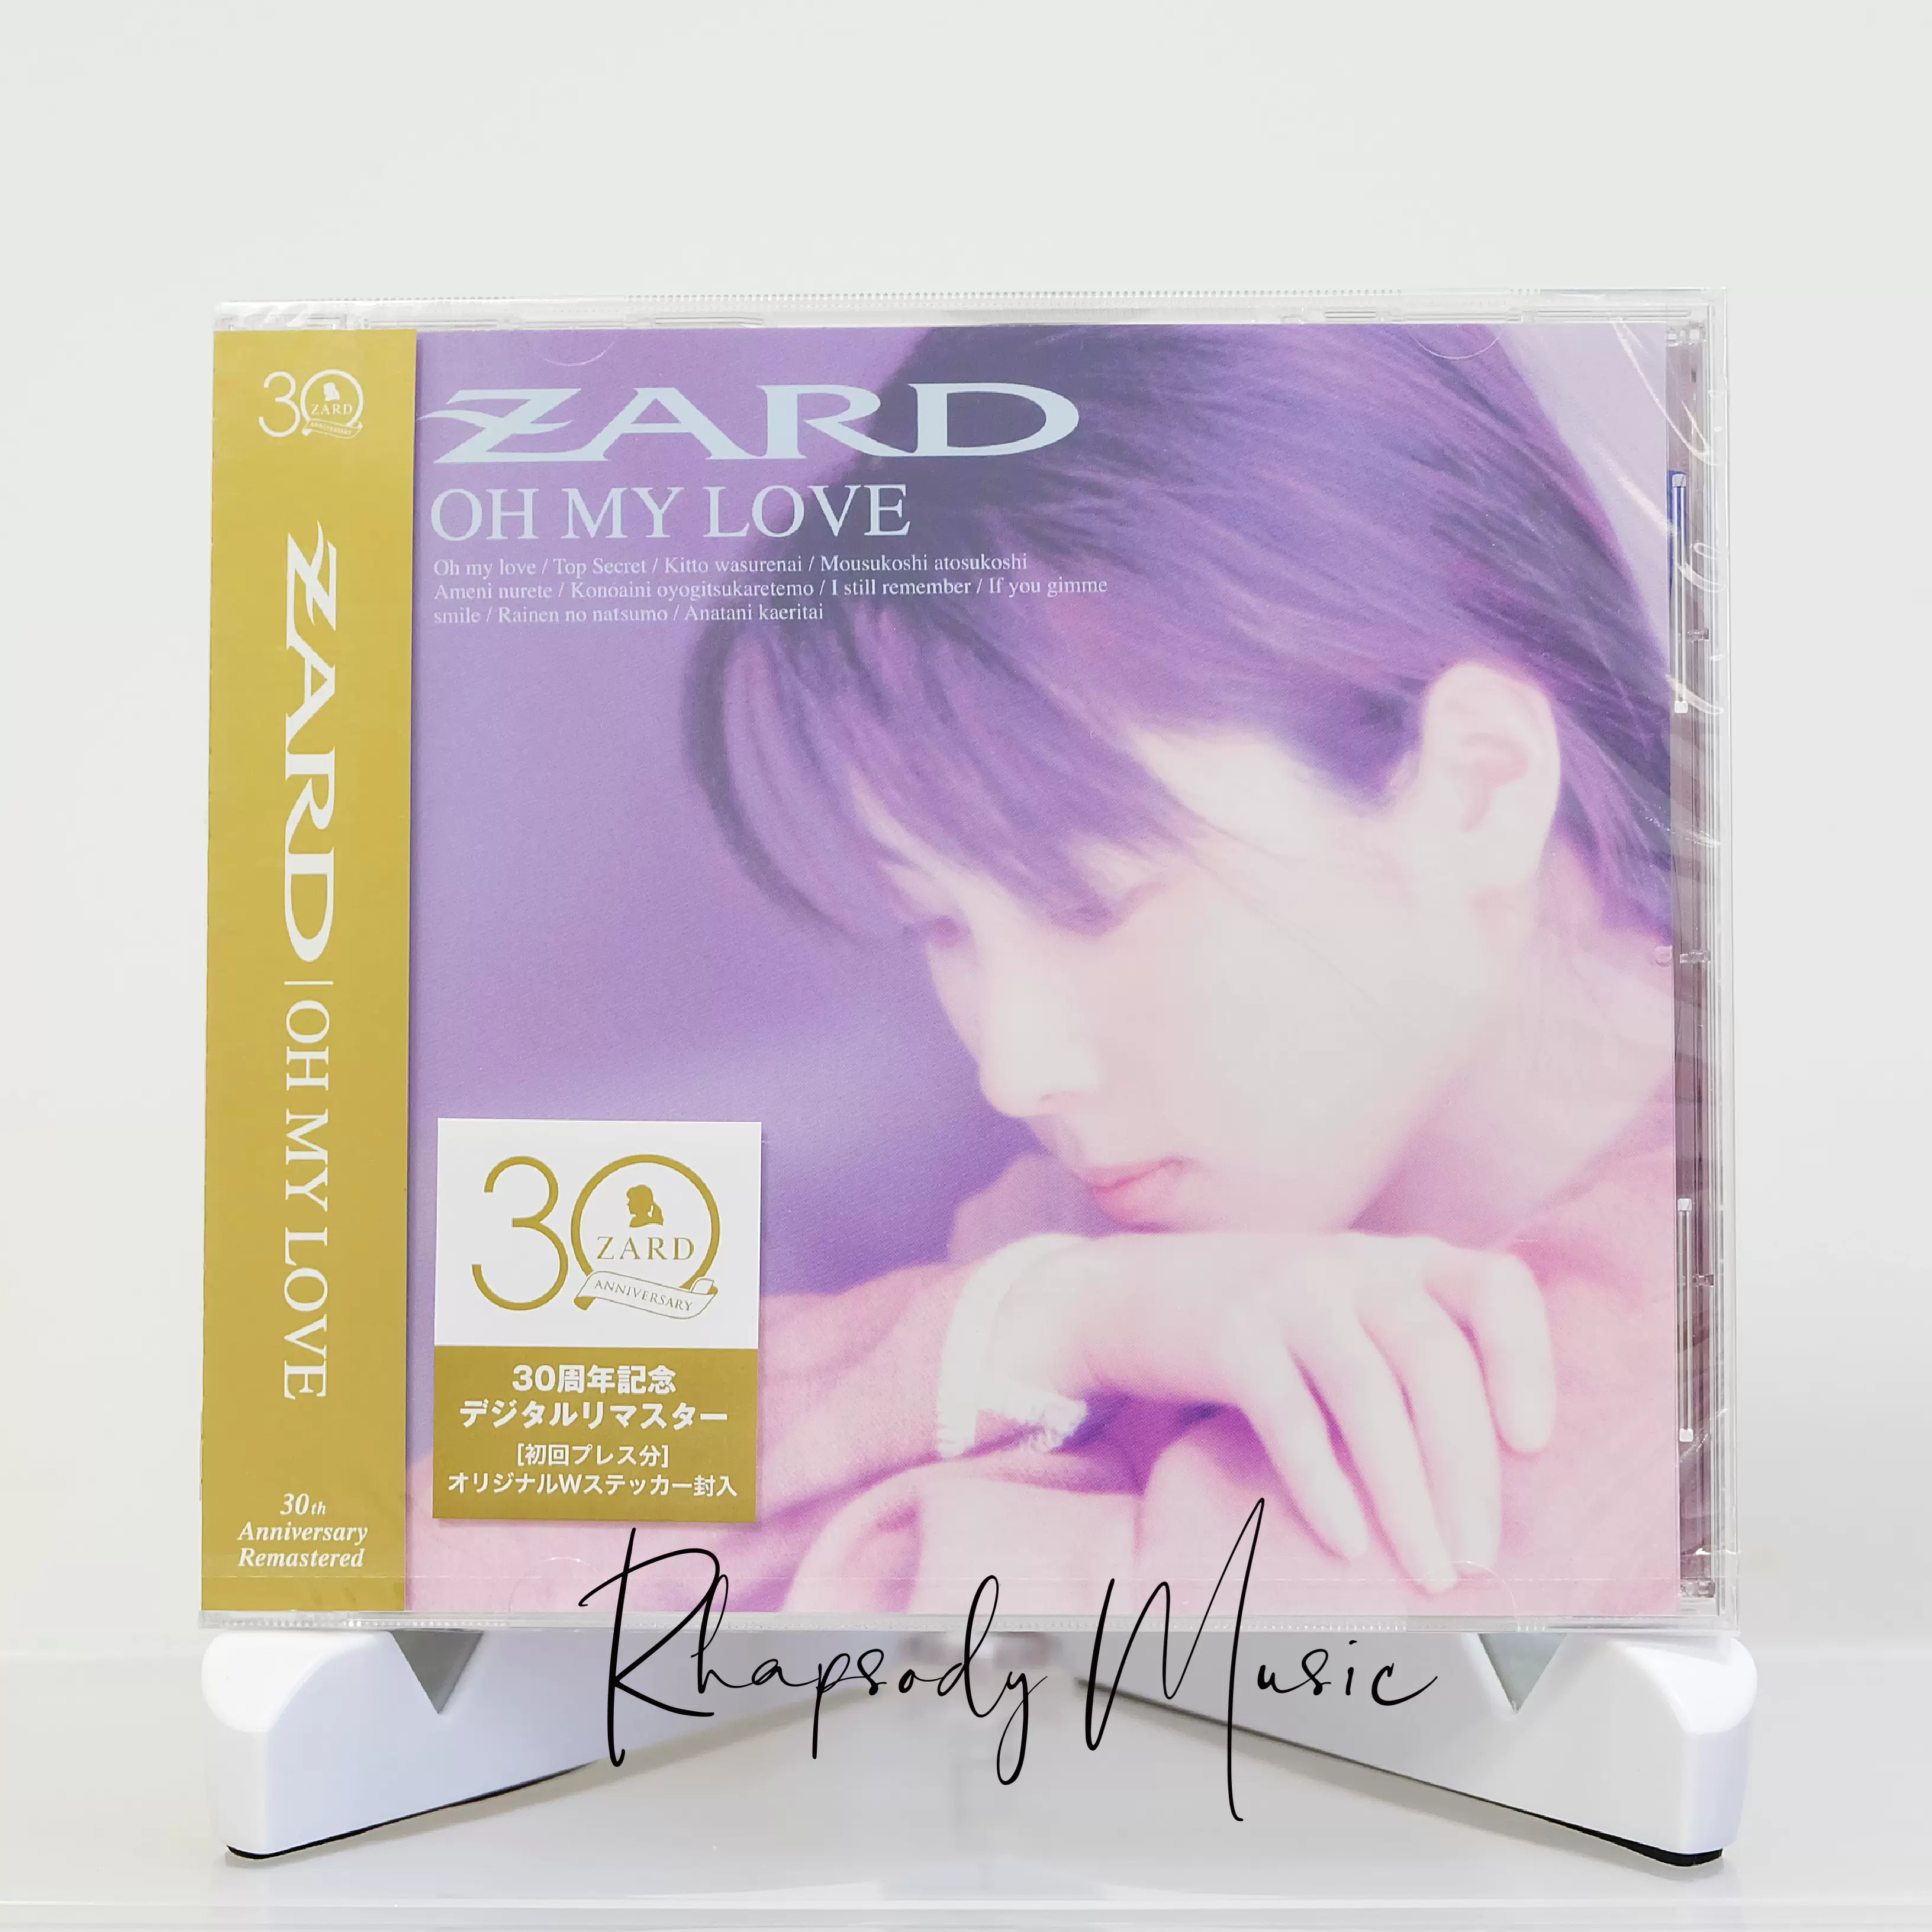 ZARD 坂井泉水OH MY LOVE 30周年纪念CD-Taobao